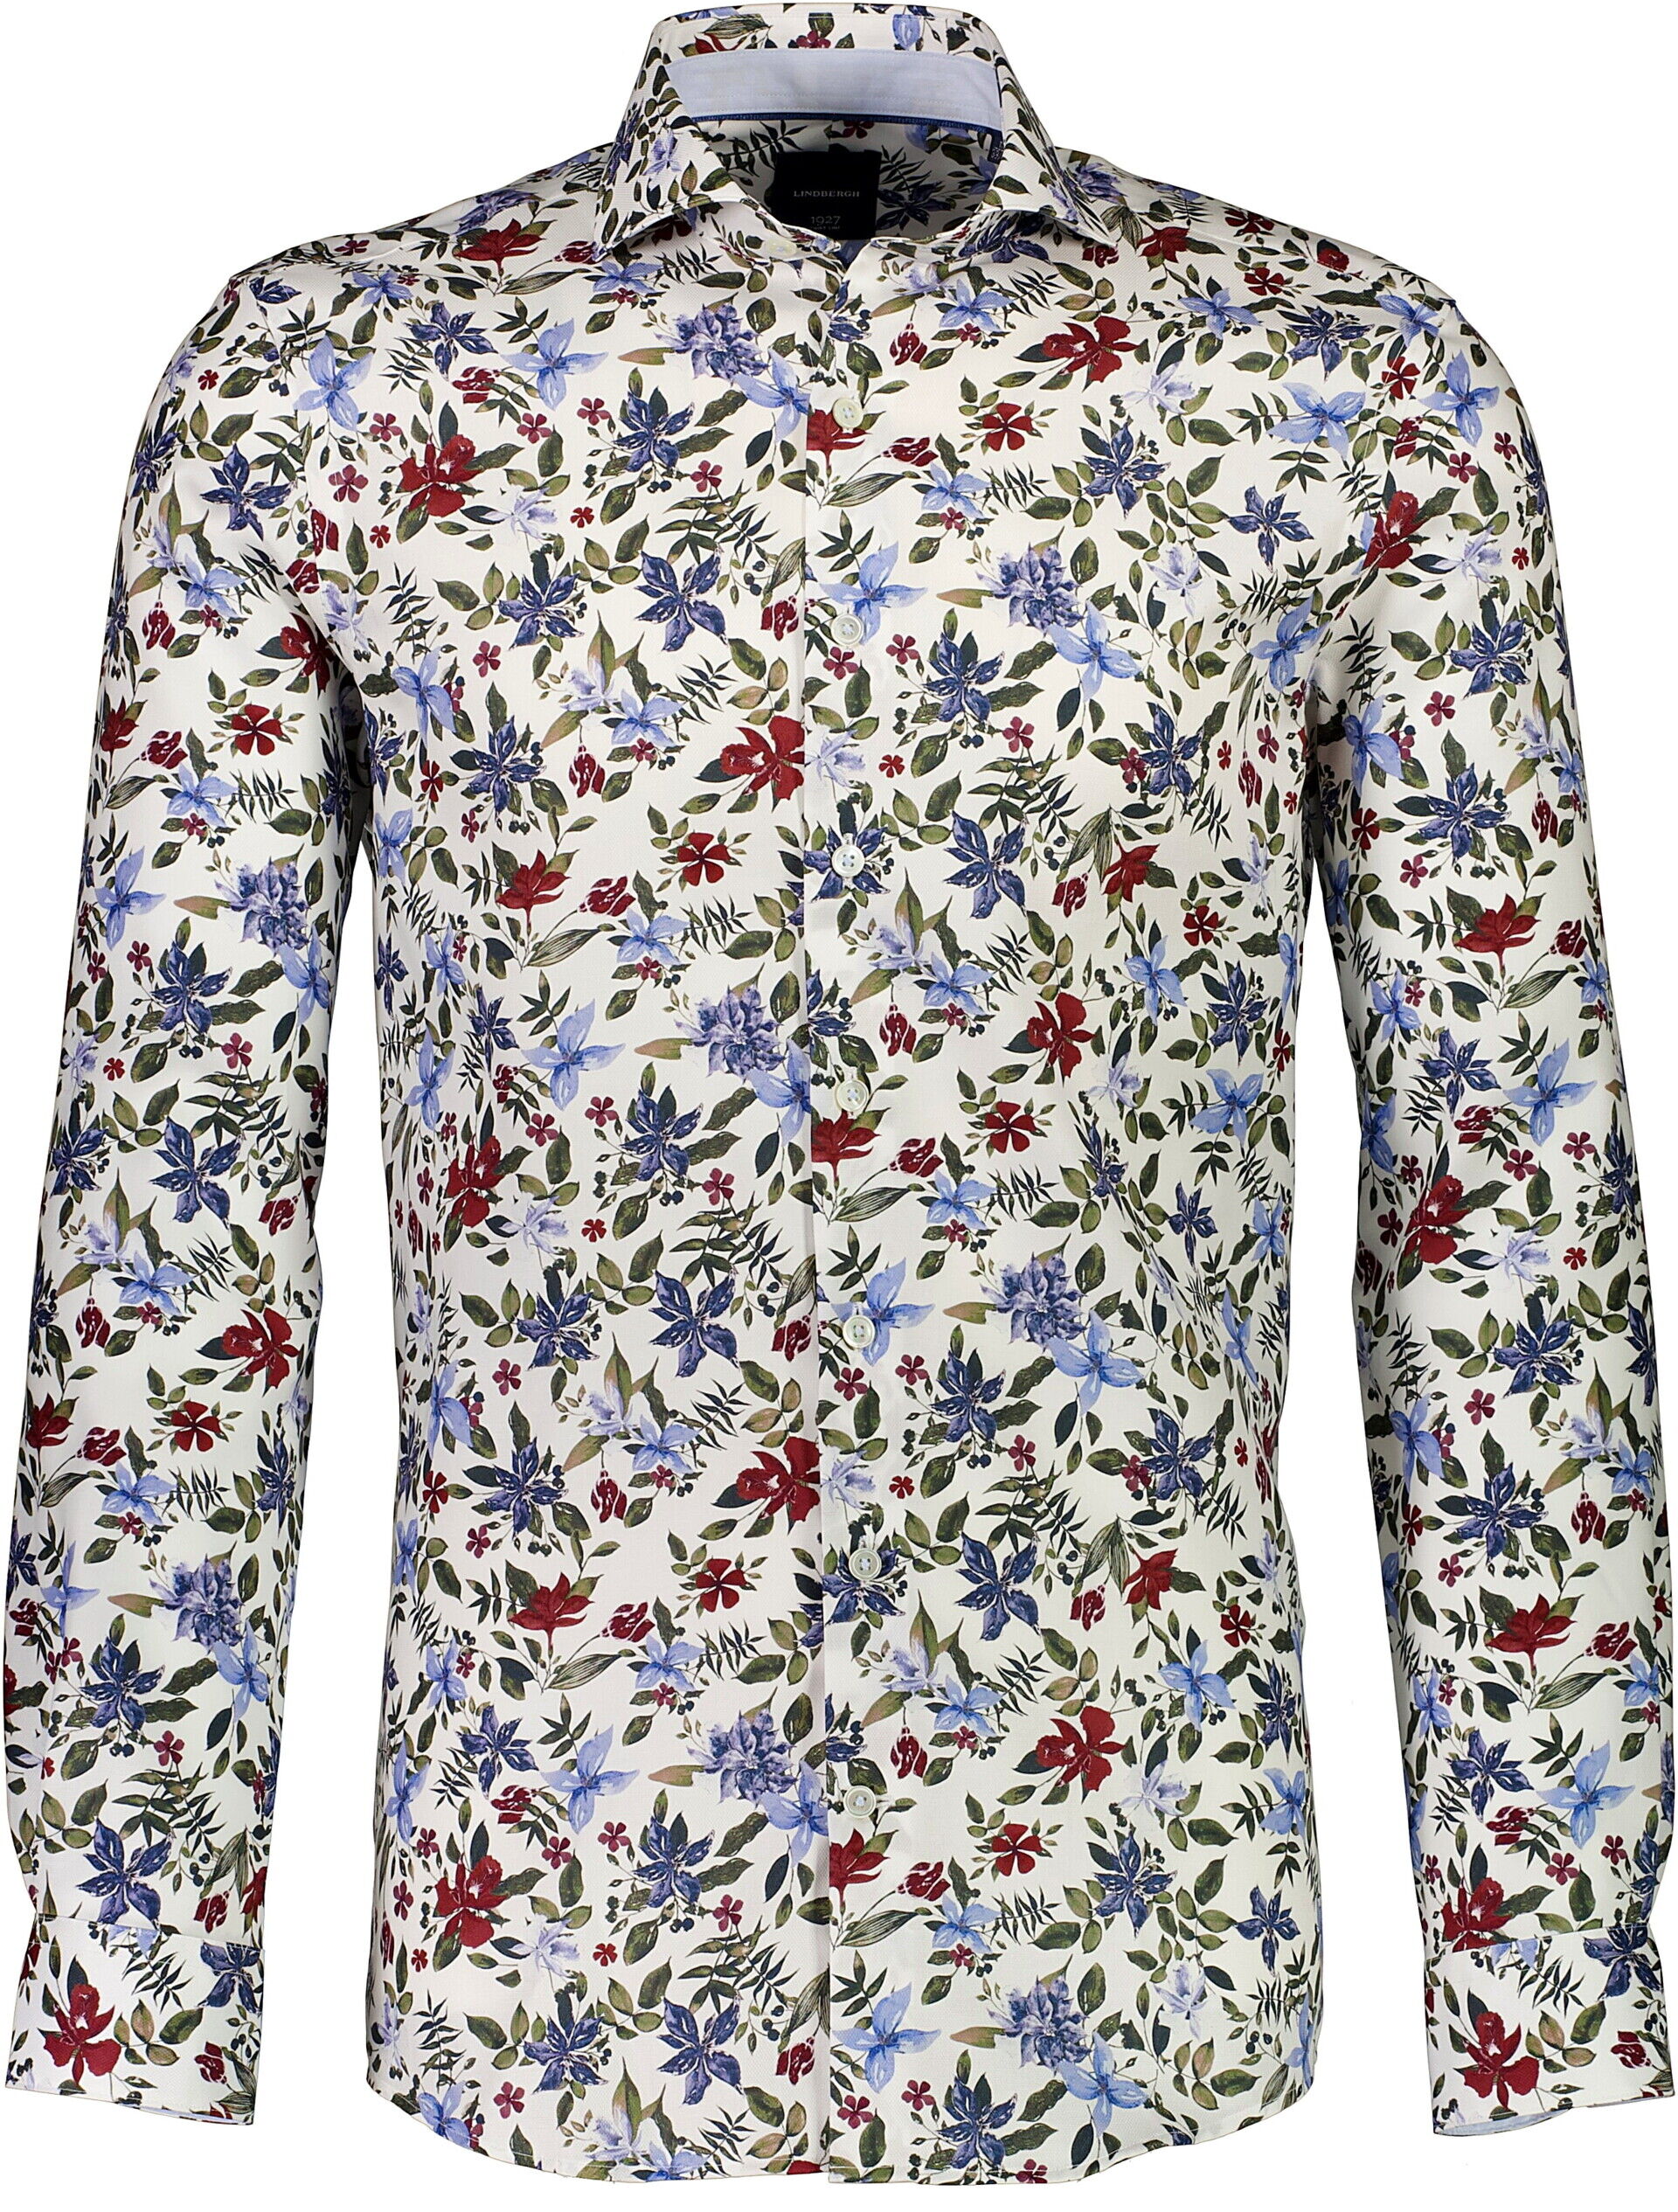 1927 Business casual shirt 30-247138